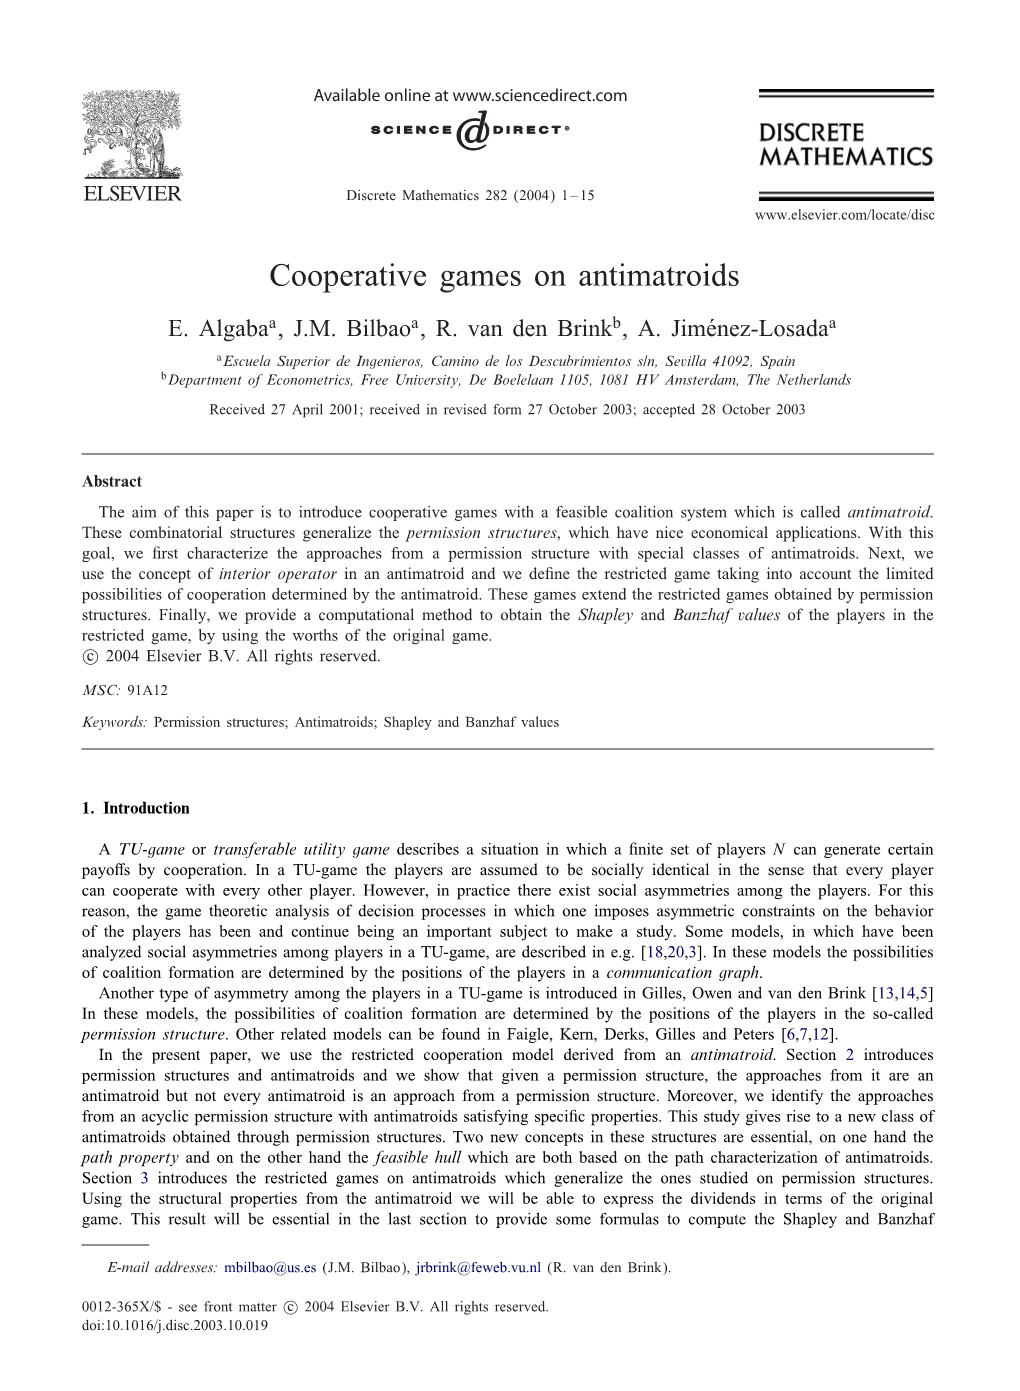 Cooperative Games on Antimatroids